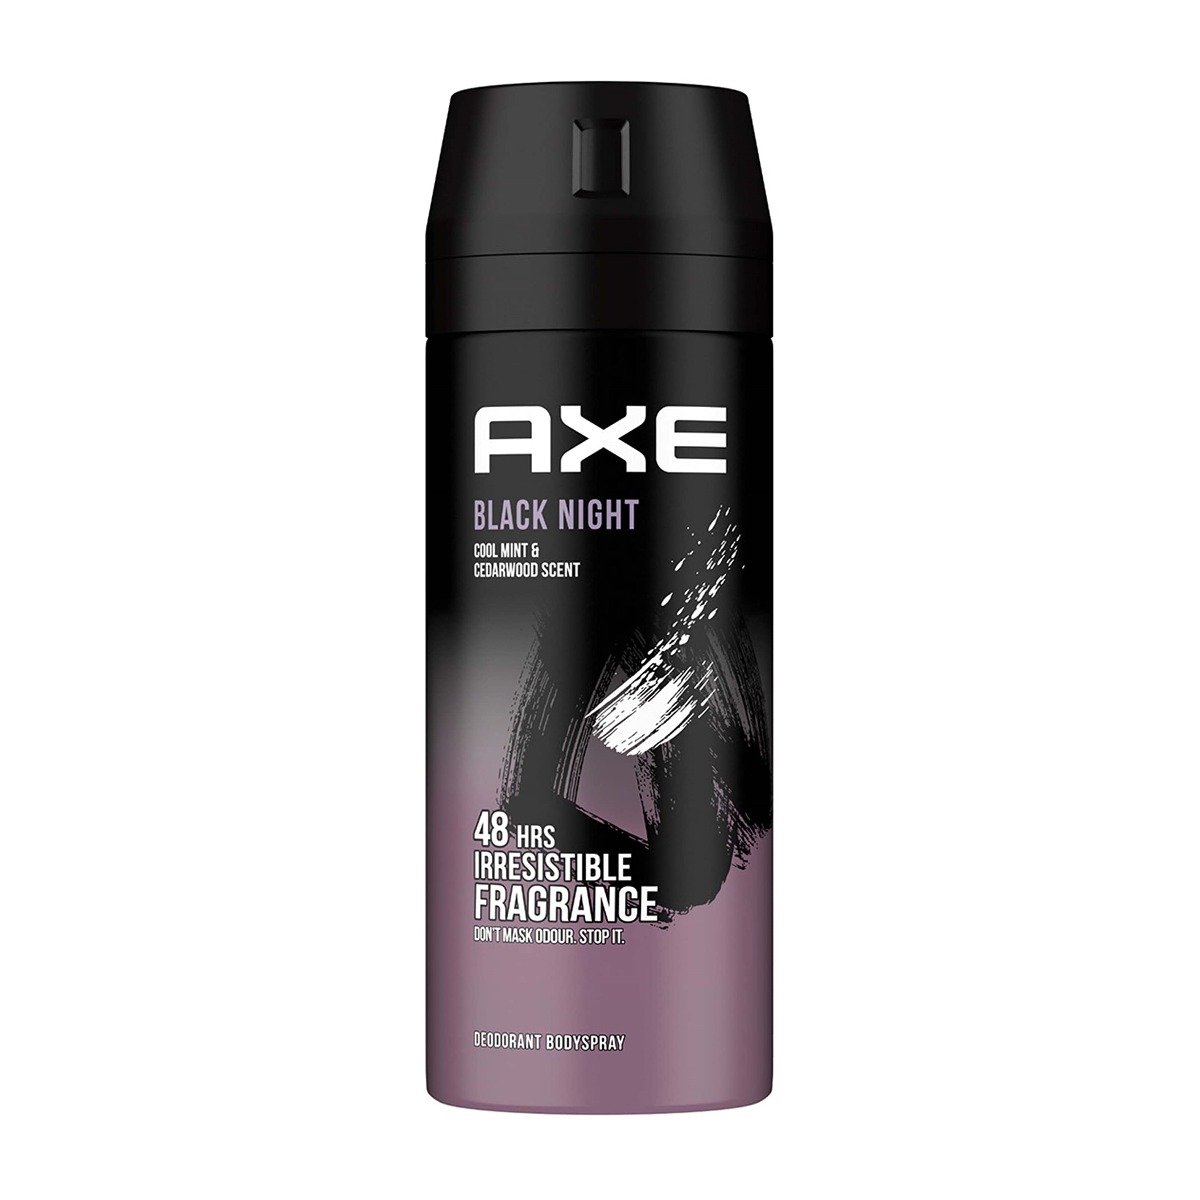 Axe Black Night Cool Mint & Cedarwood Scent Deodorant Body Spray – 150ml - Bloom Pharmacy